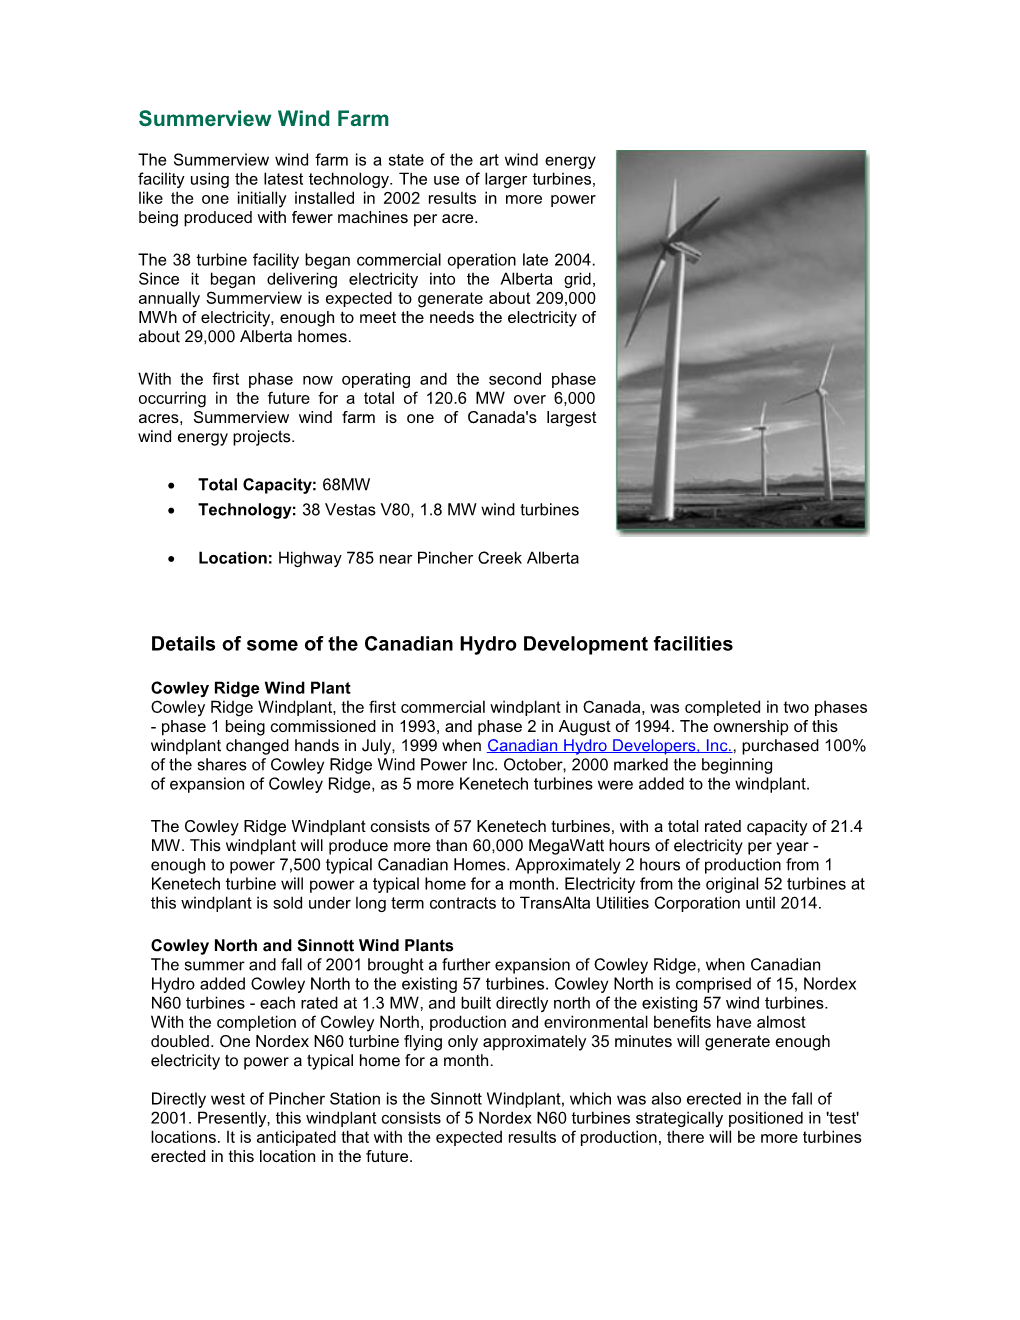 Castle River Wind Farm